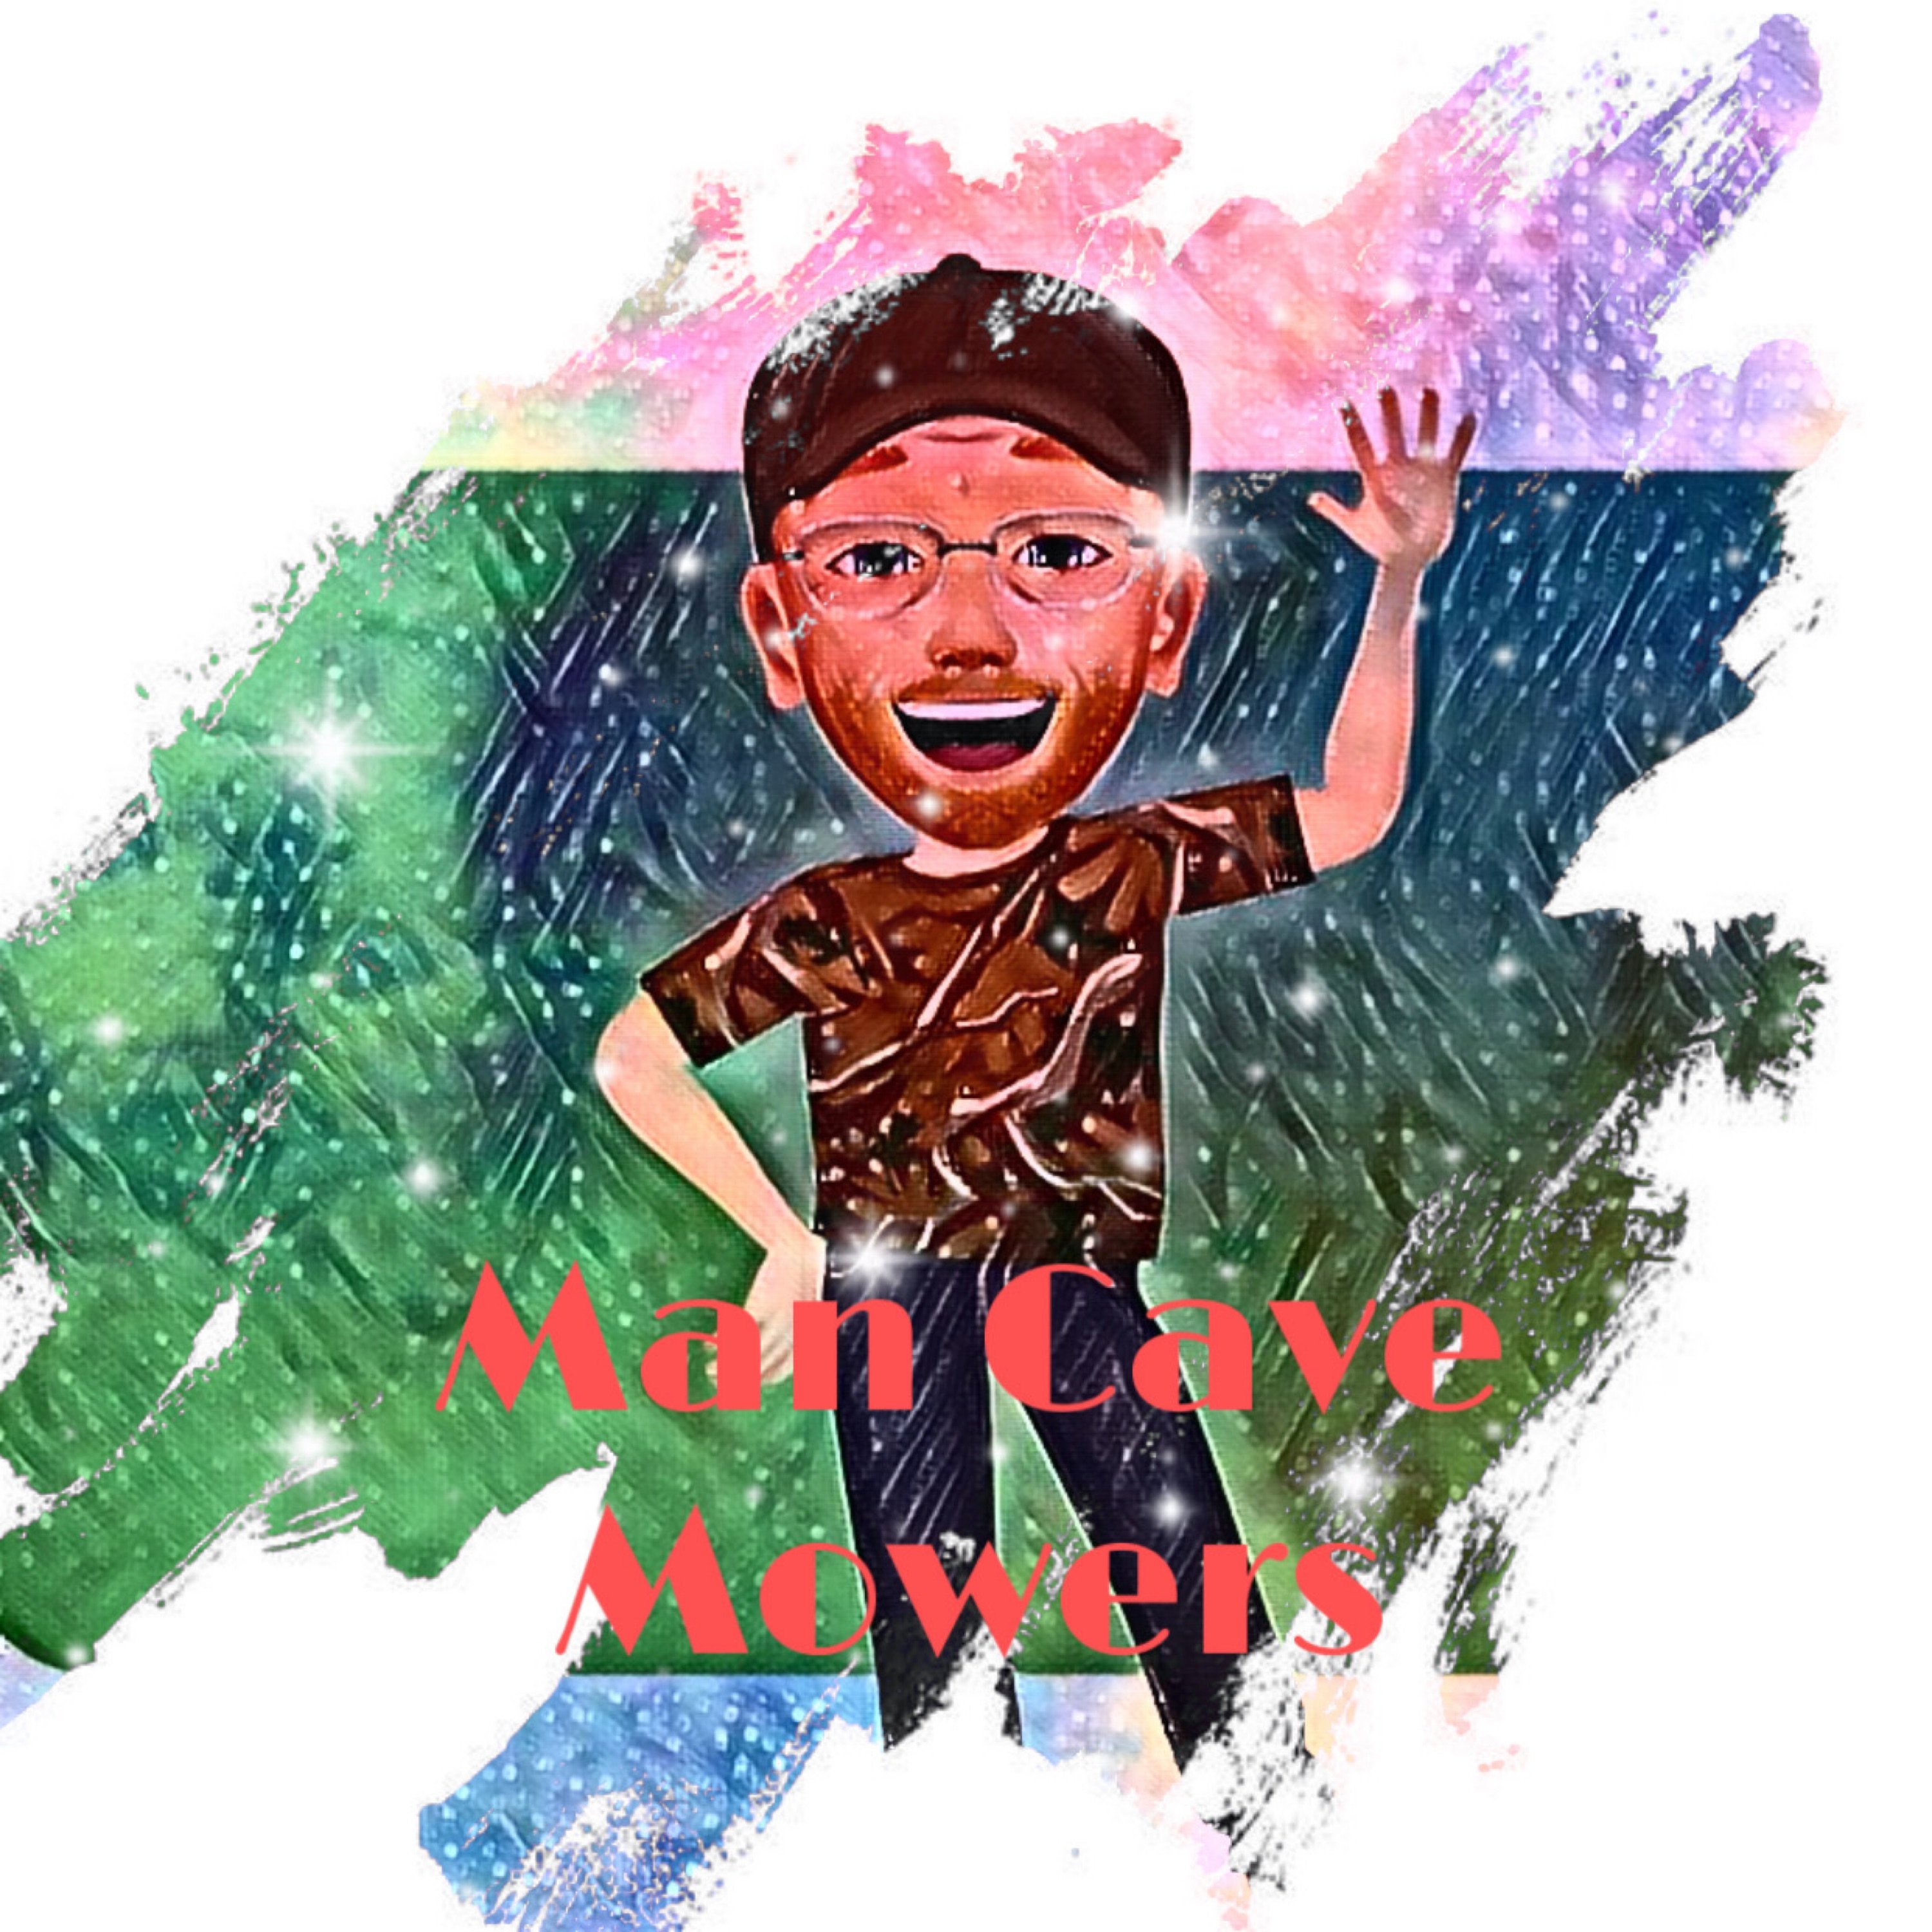 Man Cave Mowers Logo